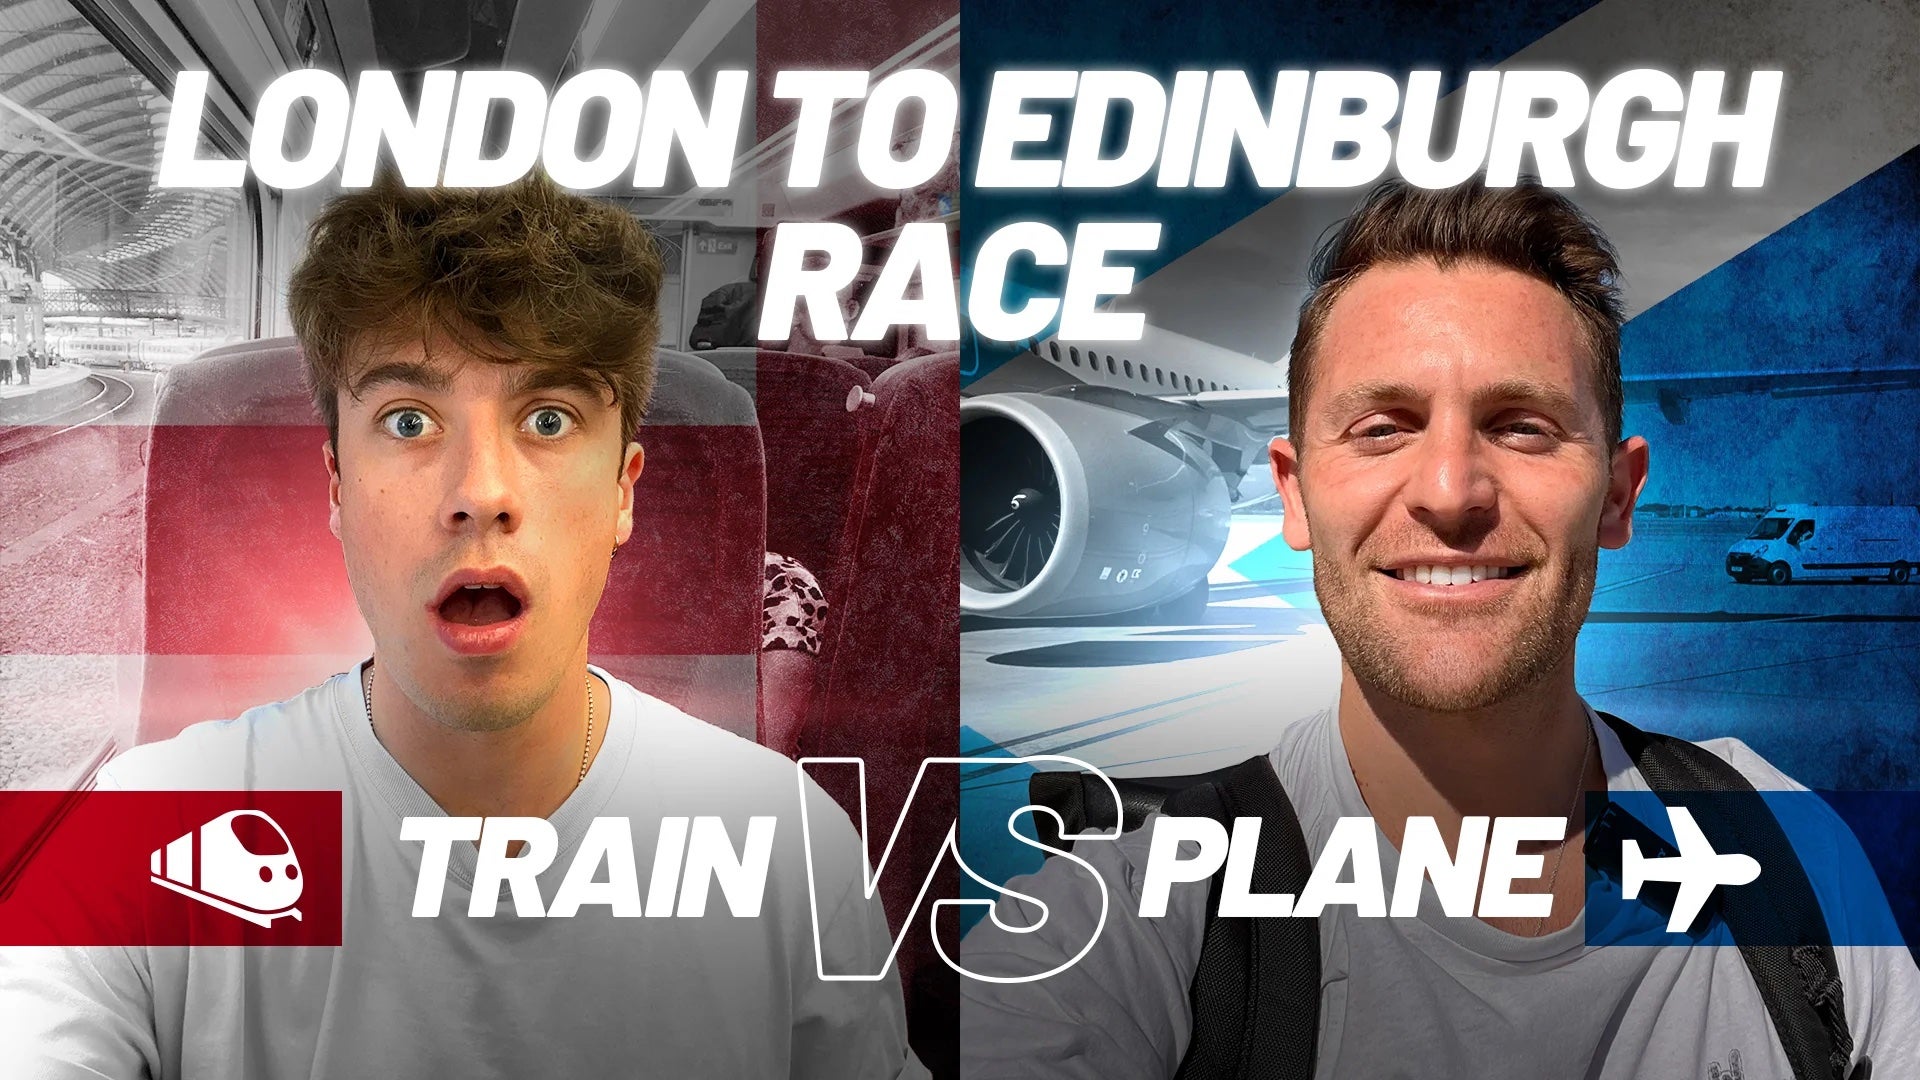 London to Edinburgh Race